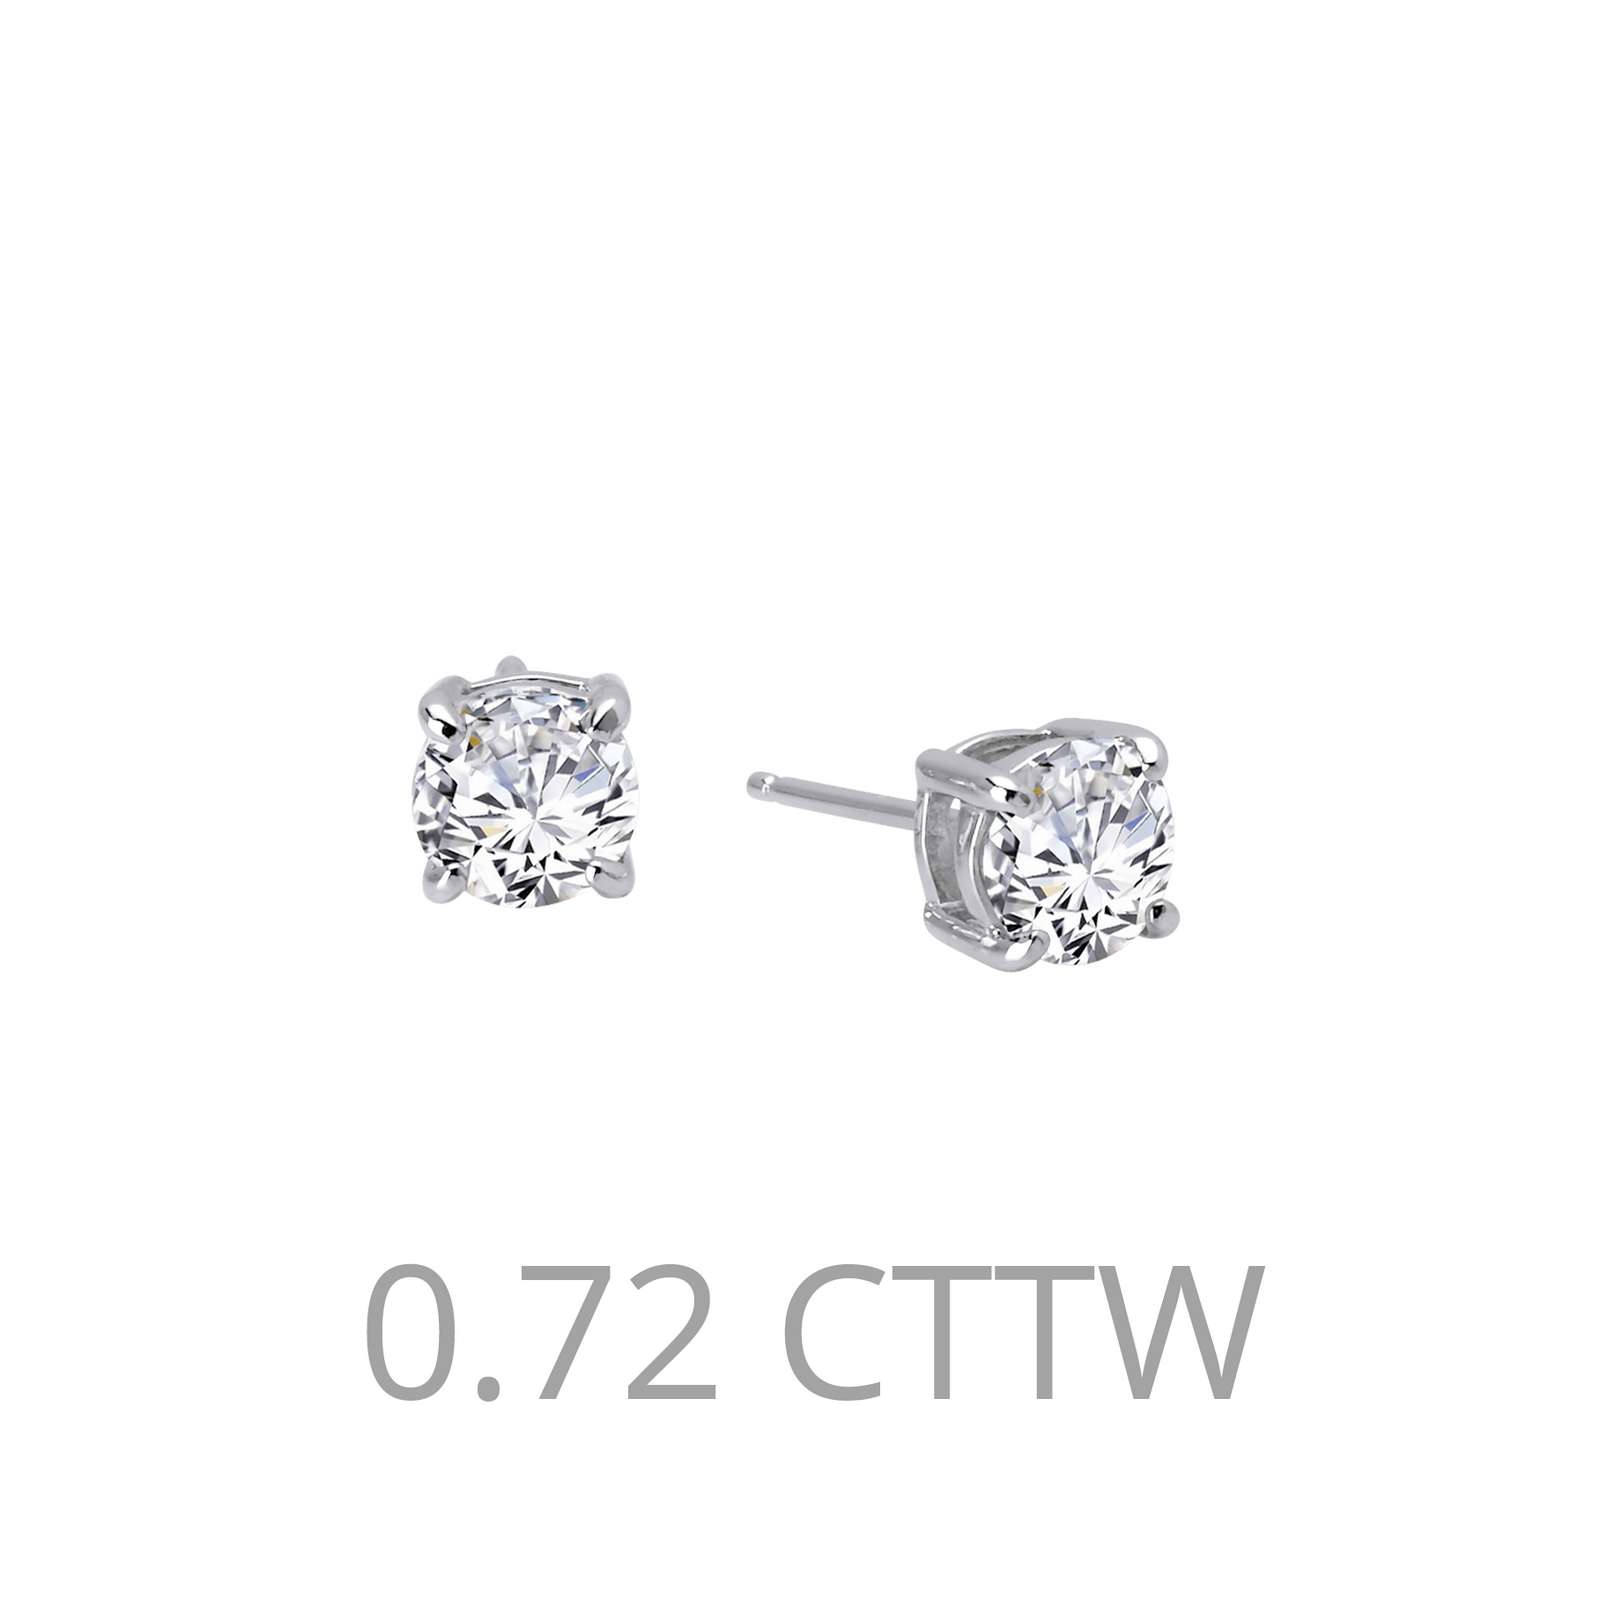 0.72 CTW Stud Earrings Griner Jewelry Co. Moultrie, GA